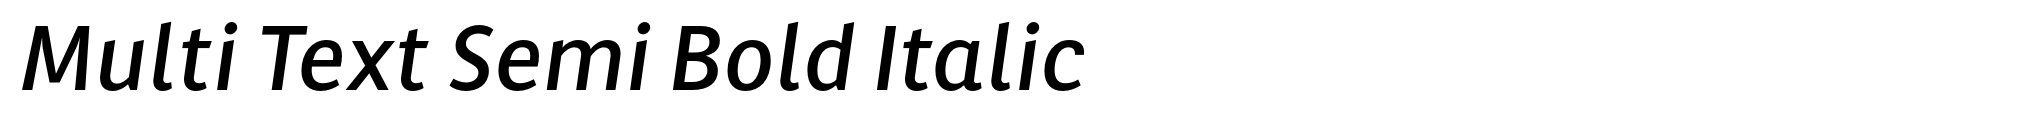 Multi Text Semi Bold Italic image